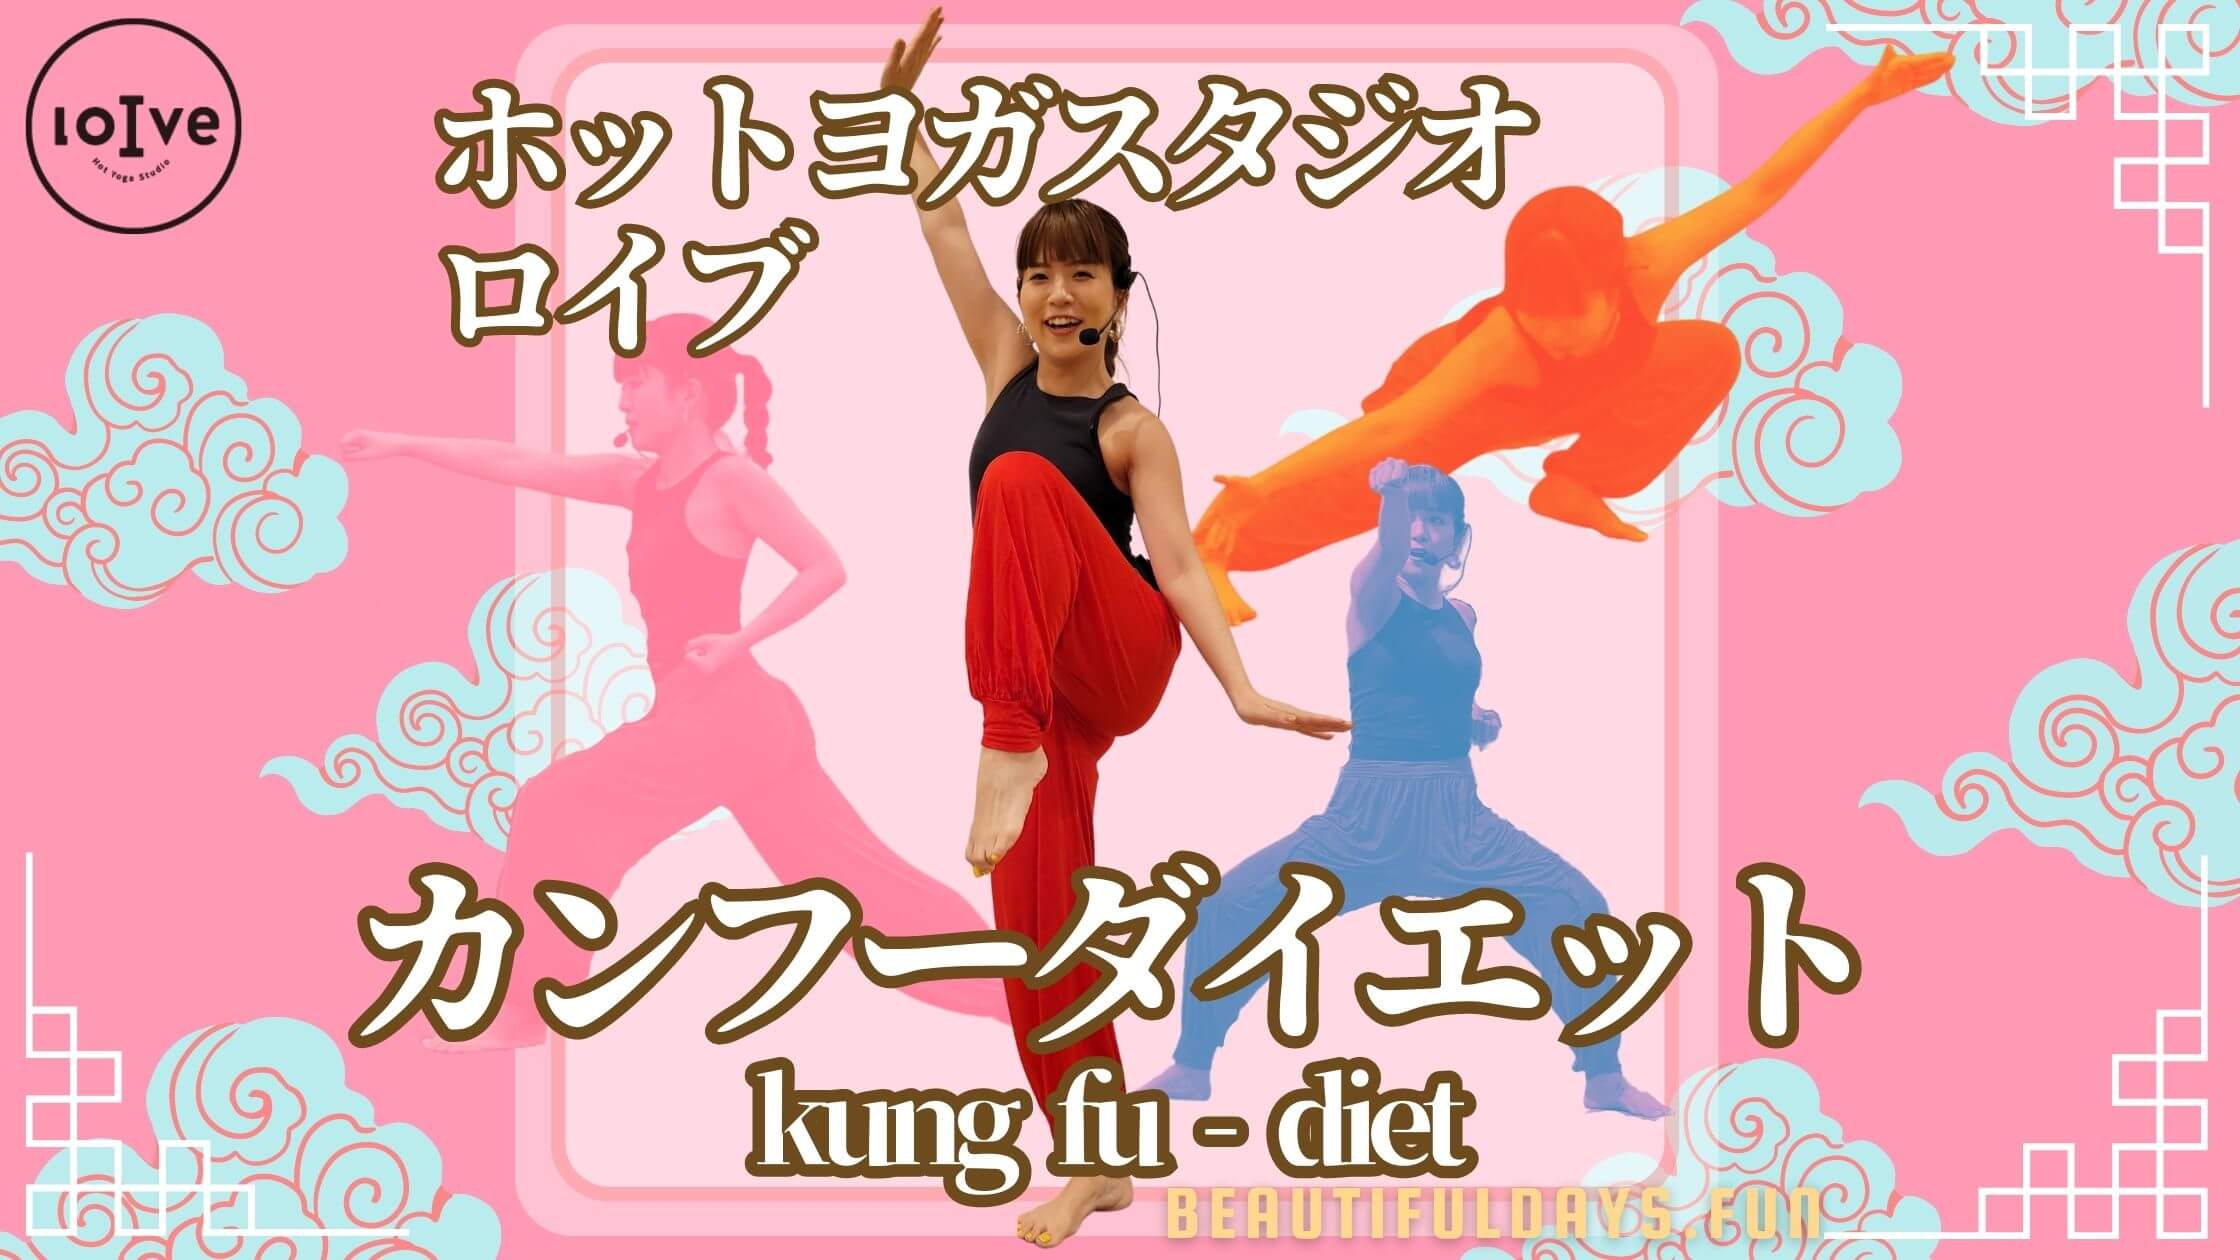 kungfu-diet-eyecatch (1)